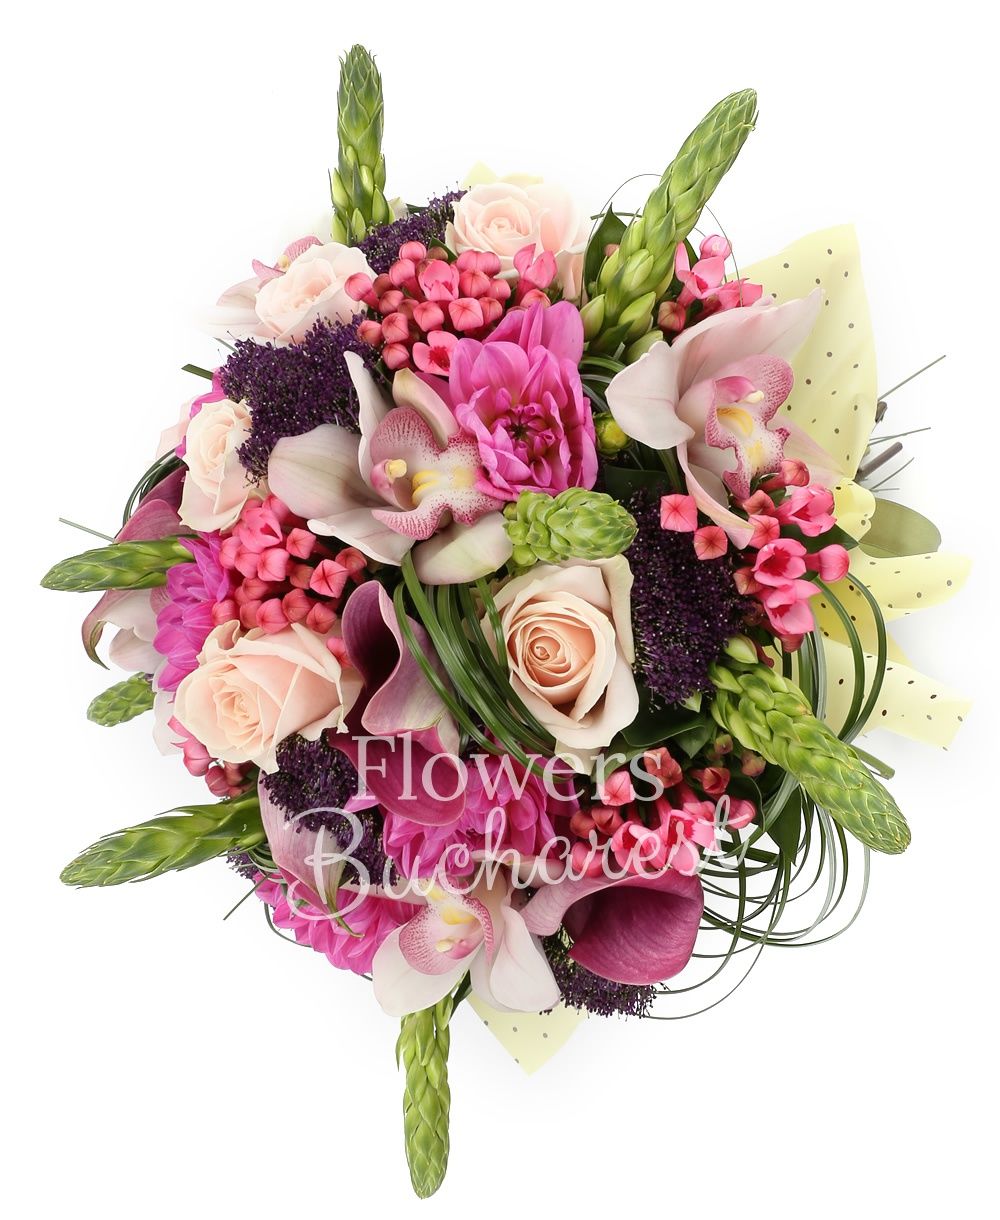 7 ornithogalum, 5 cream roses, 5 pink bouvardia, 5 purple trachelium, 5 pink cala, 5 pink dahlias, white cymbidium, greenery